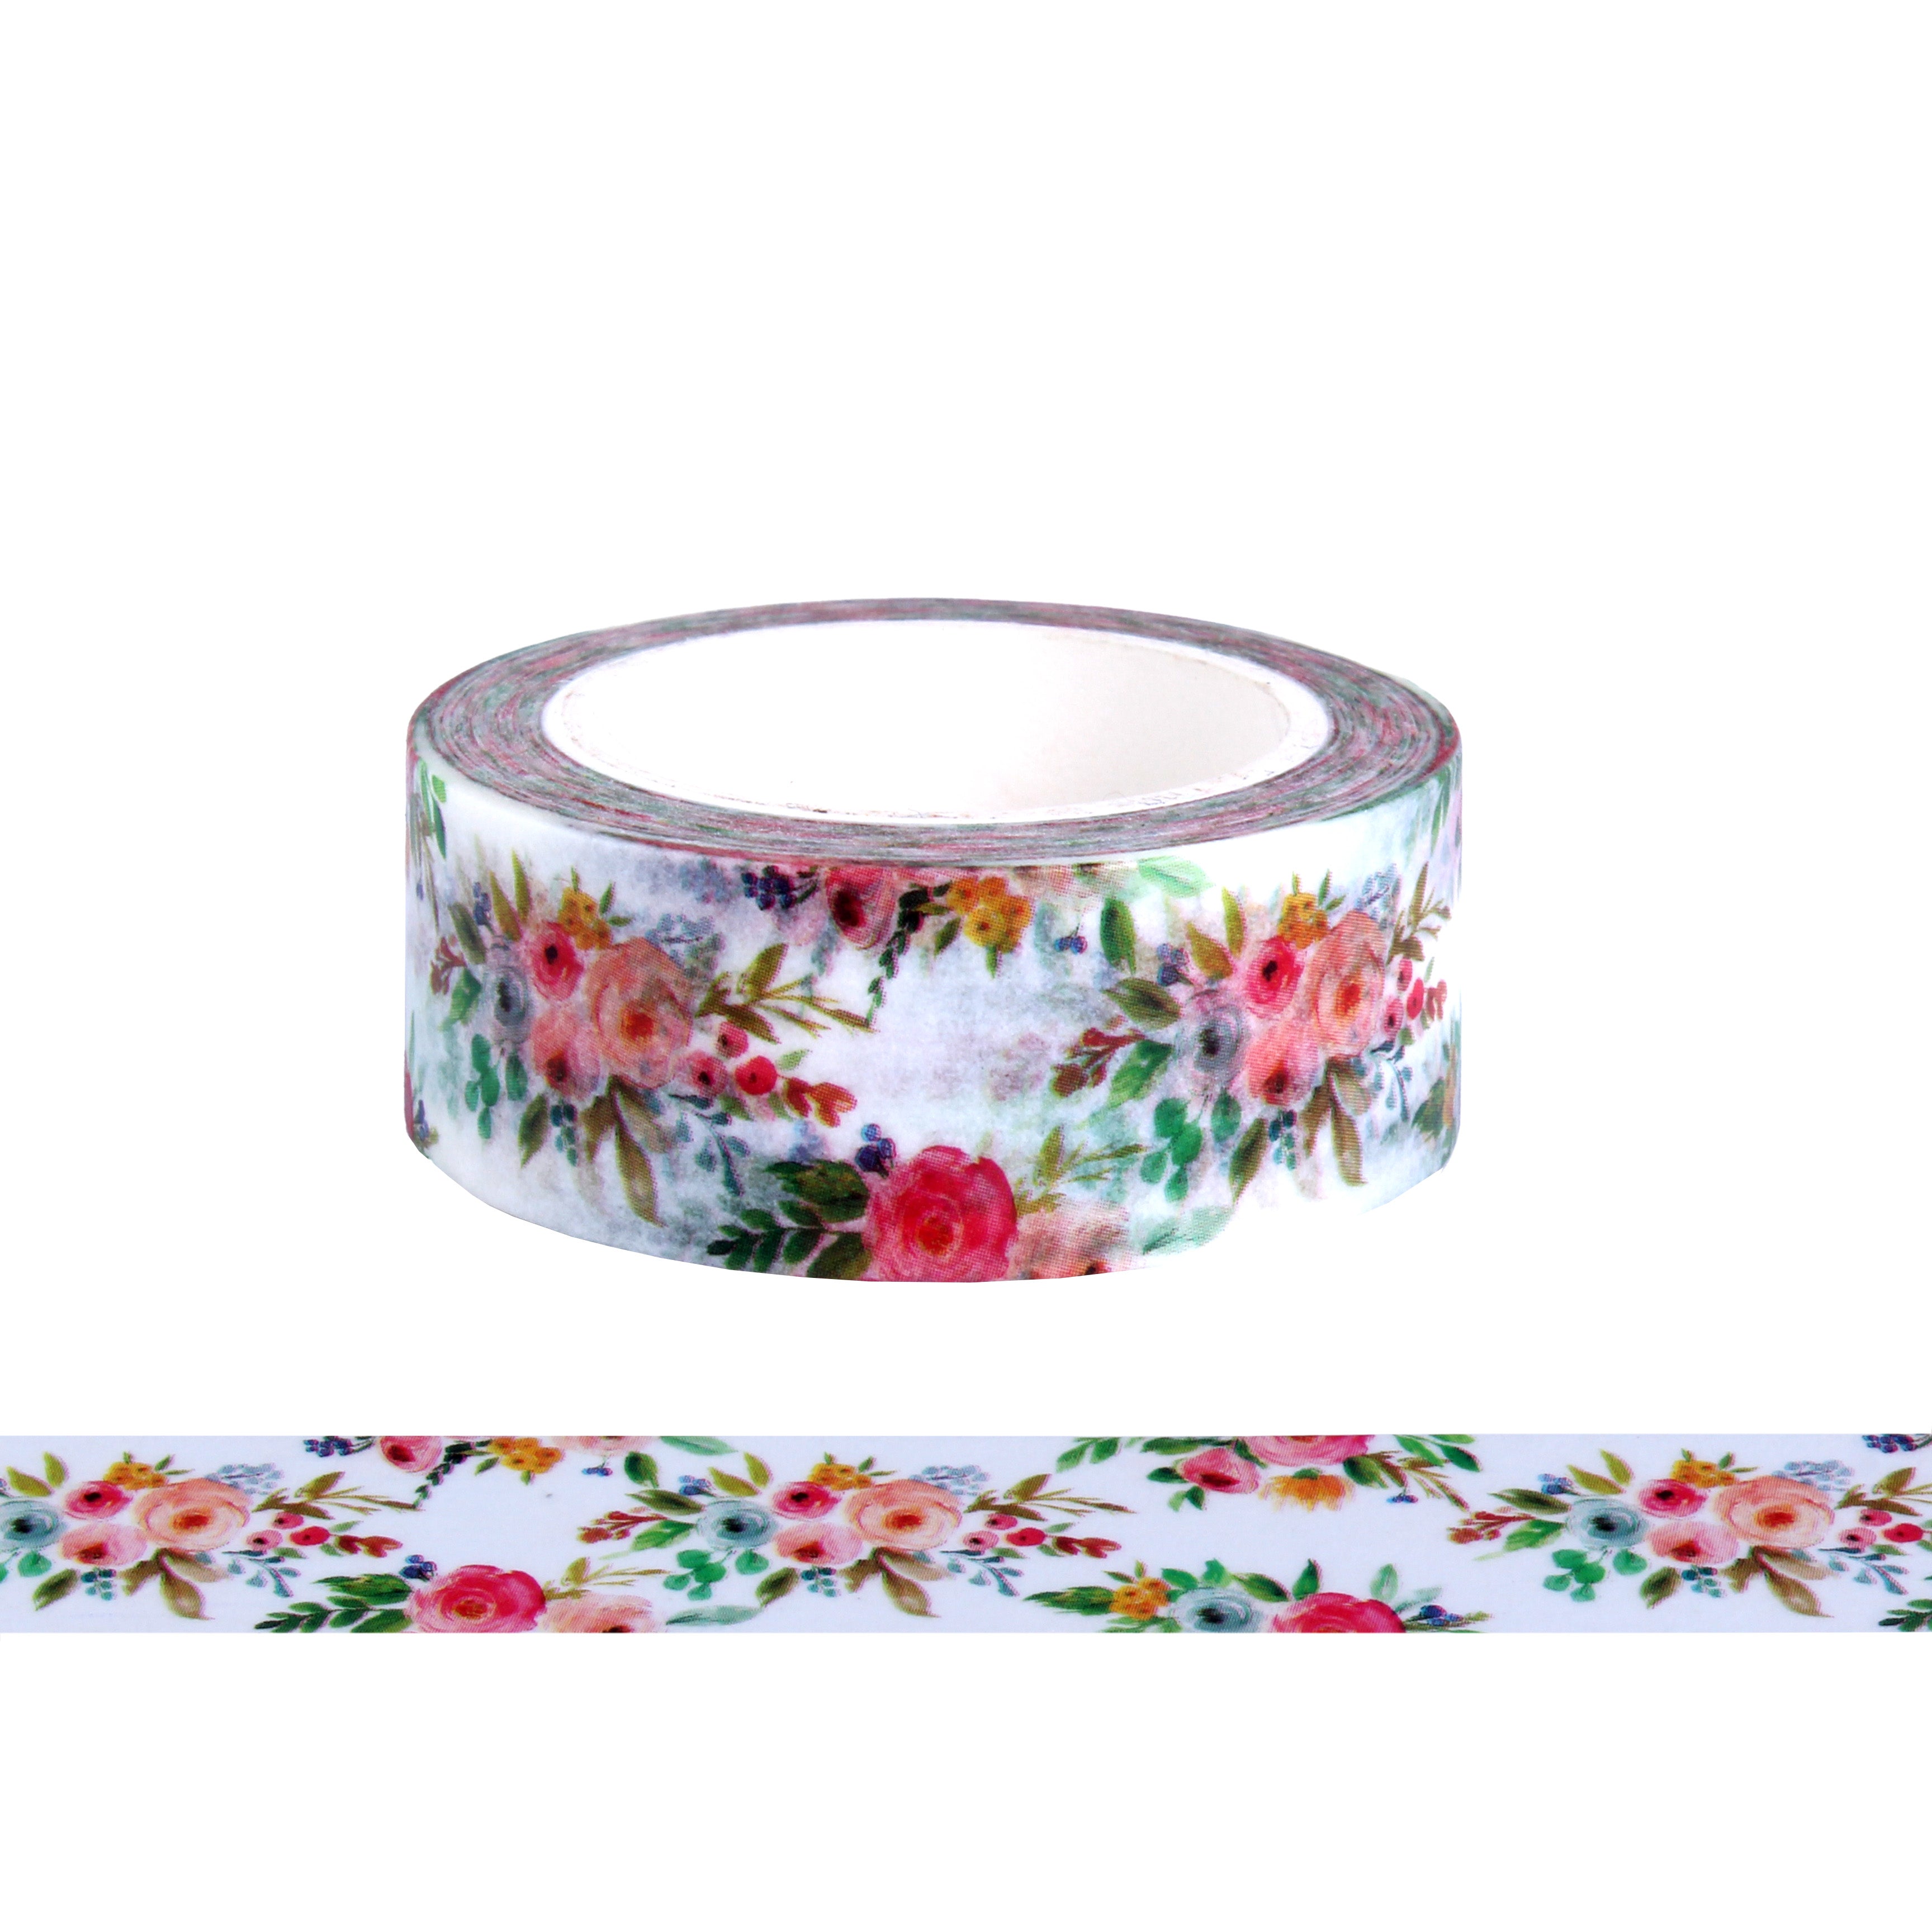 Washi Tape Floral Garland 15mmx10Mtr 1Roll